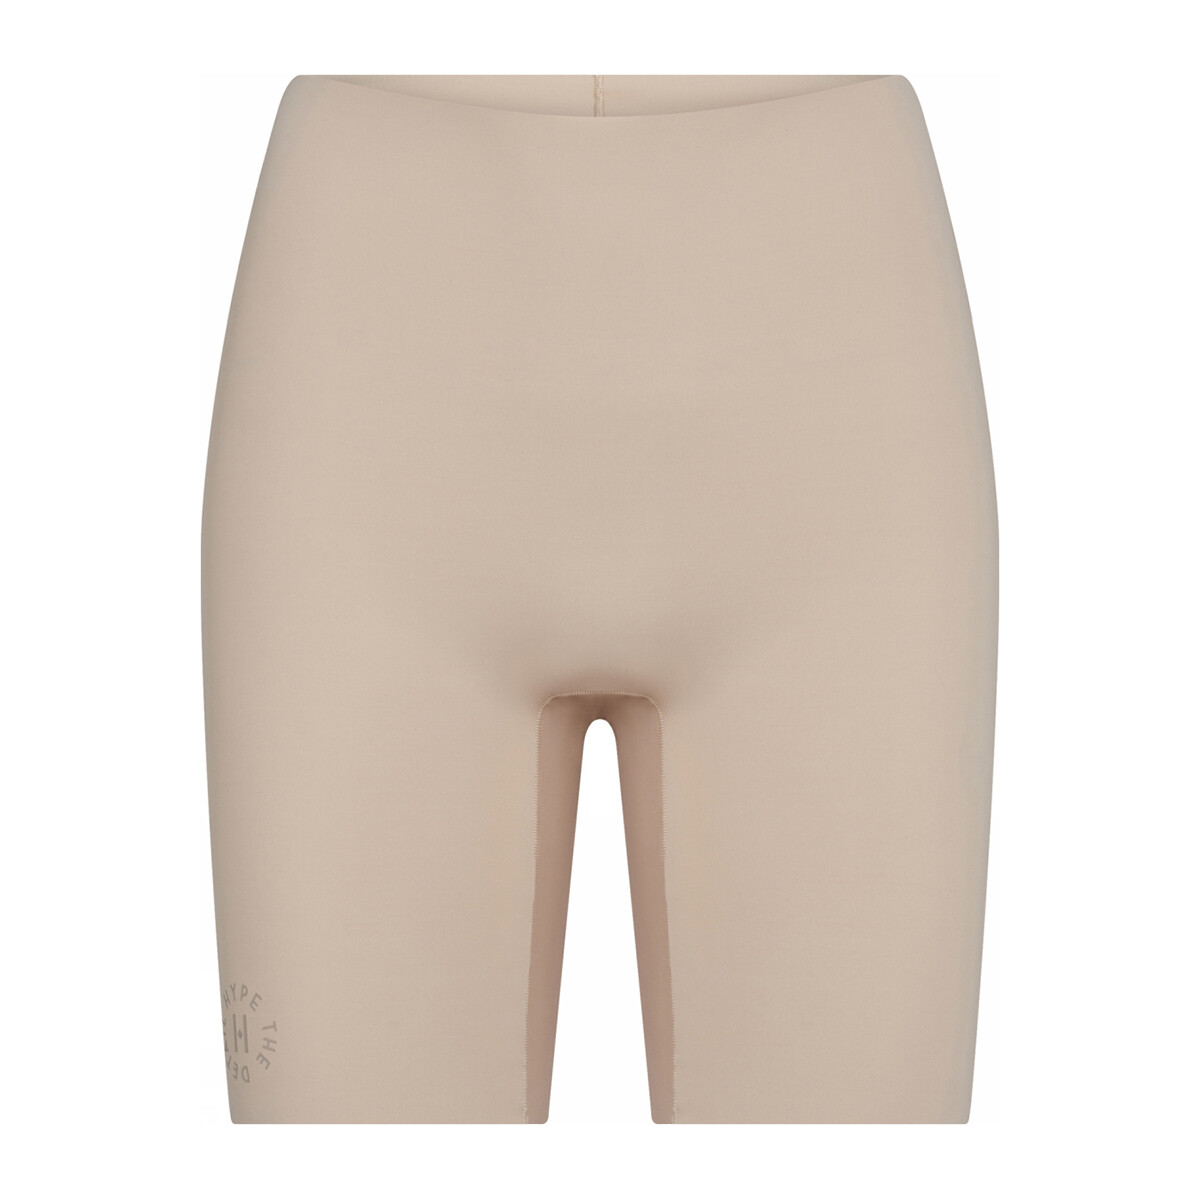 Se Hype The Detail Essentials Shorts, Farve: Beige, Størrelse: XXL, Dame hos Netlingeri.dk